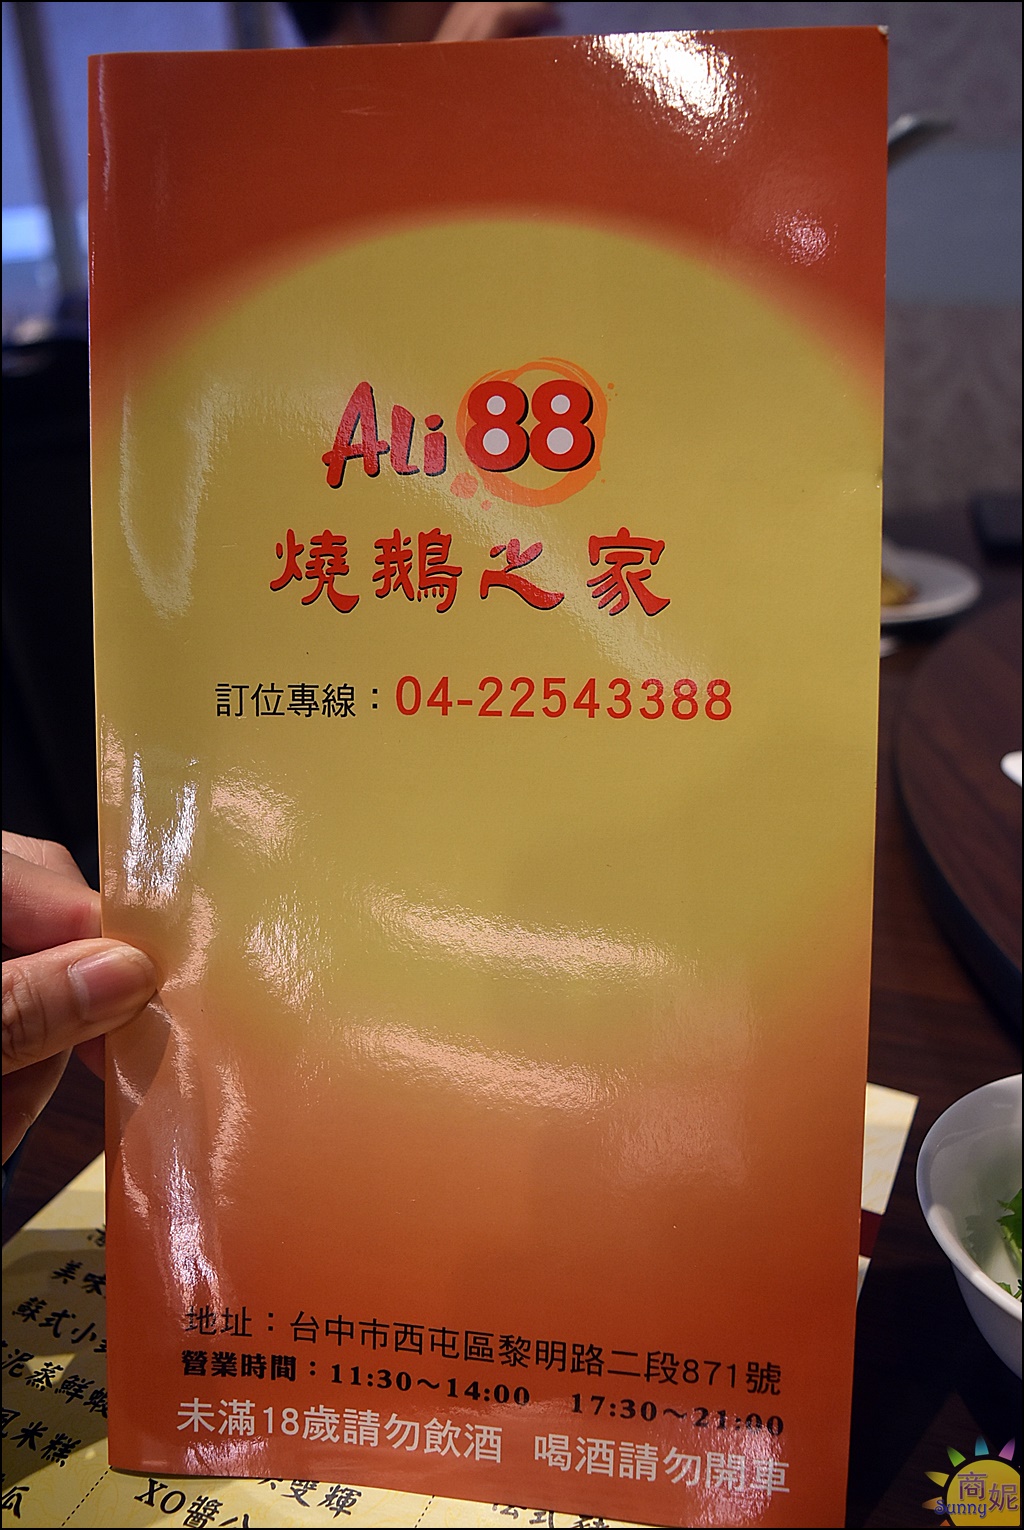 Ali88燒鵝之家菜單